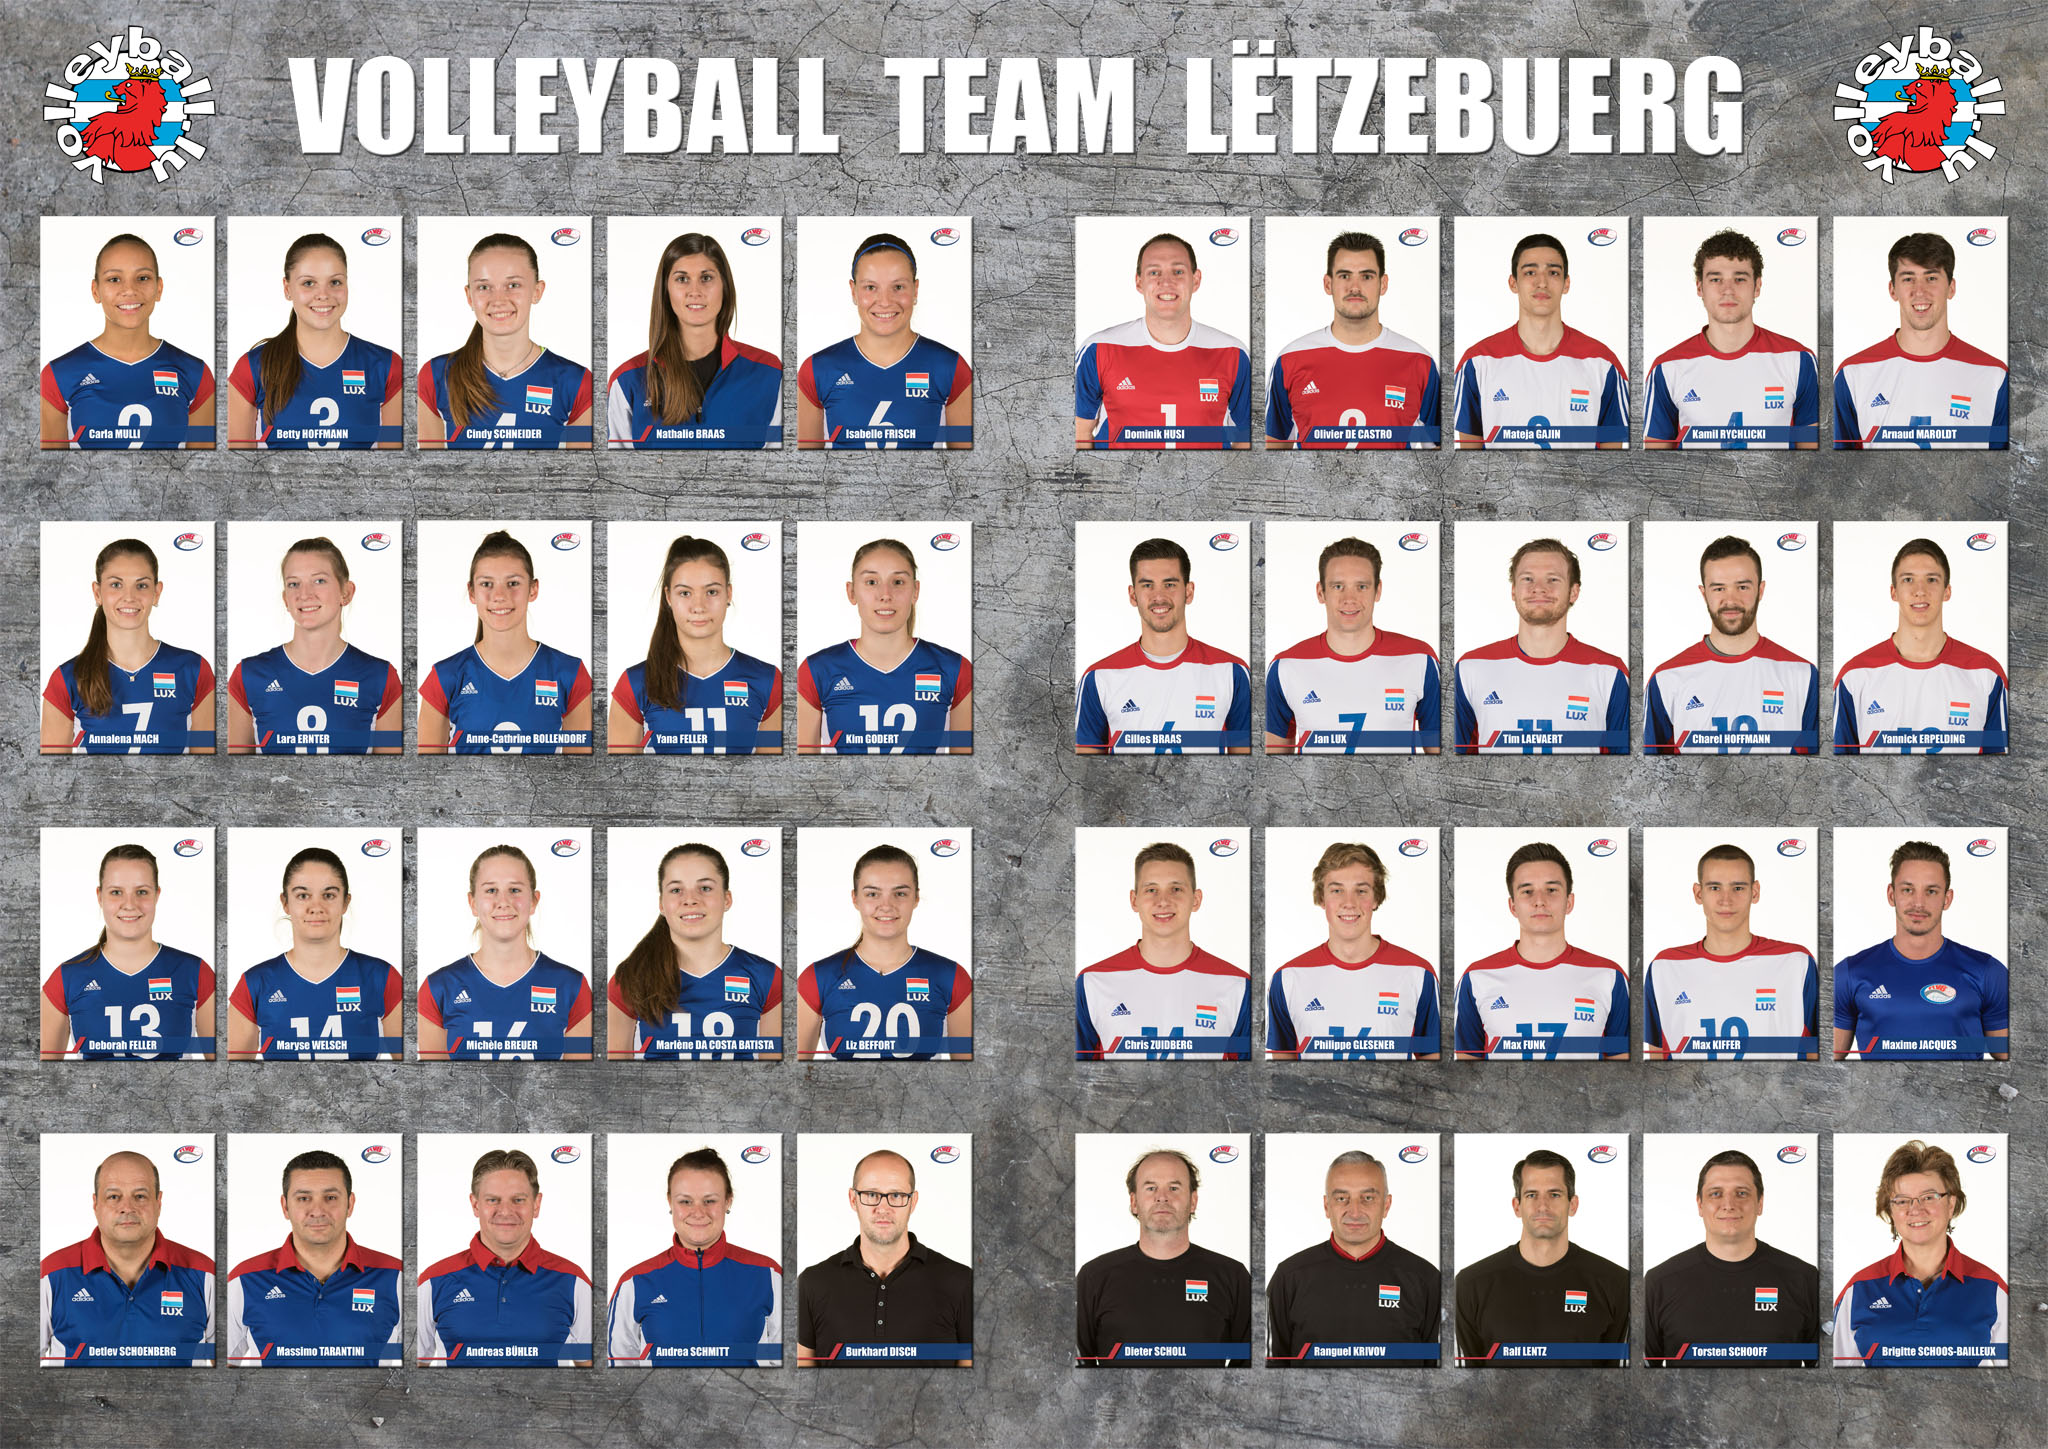 2016 Team Letzebuerg